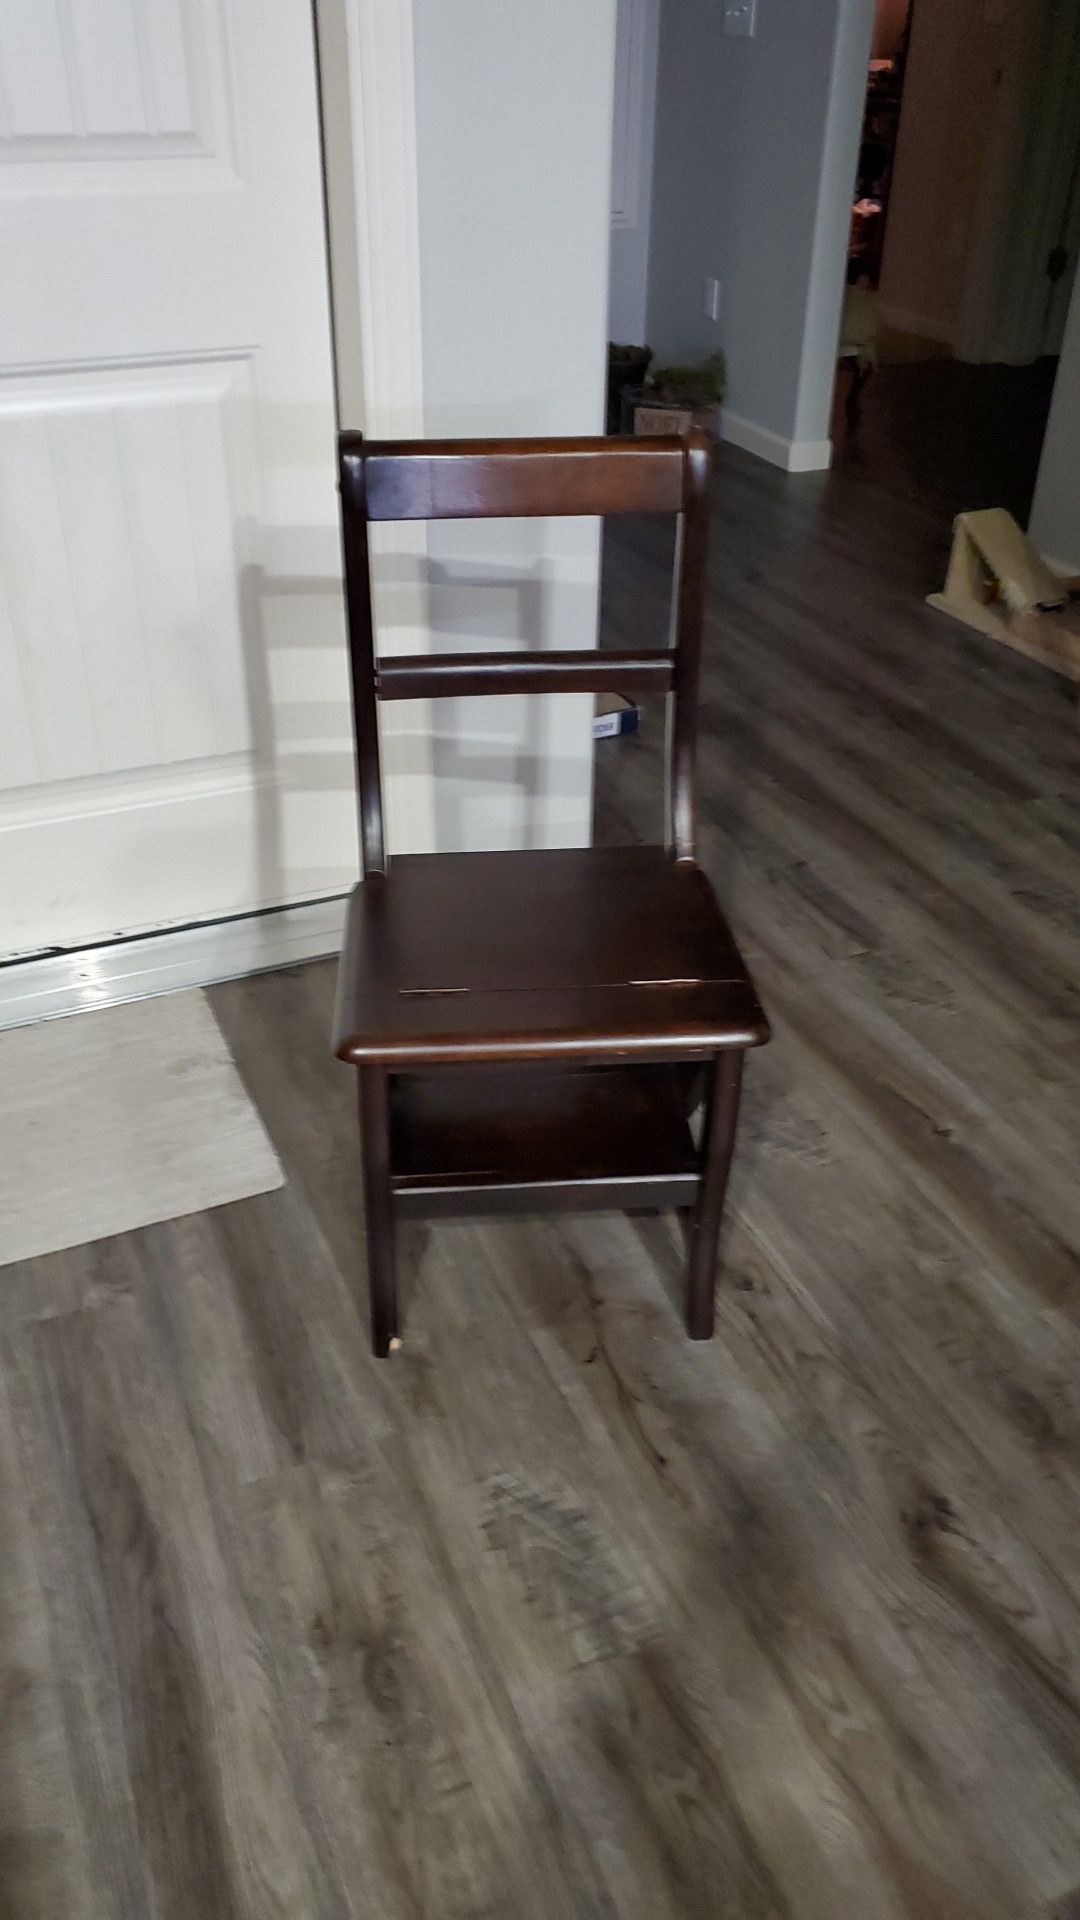 Converting chair steep stool